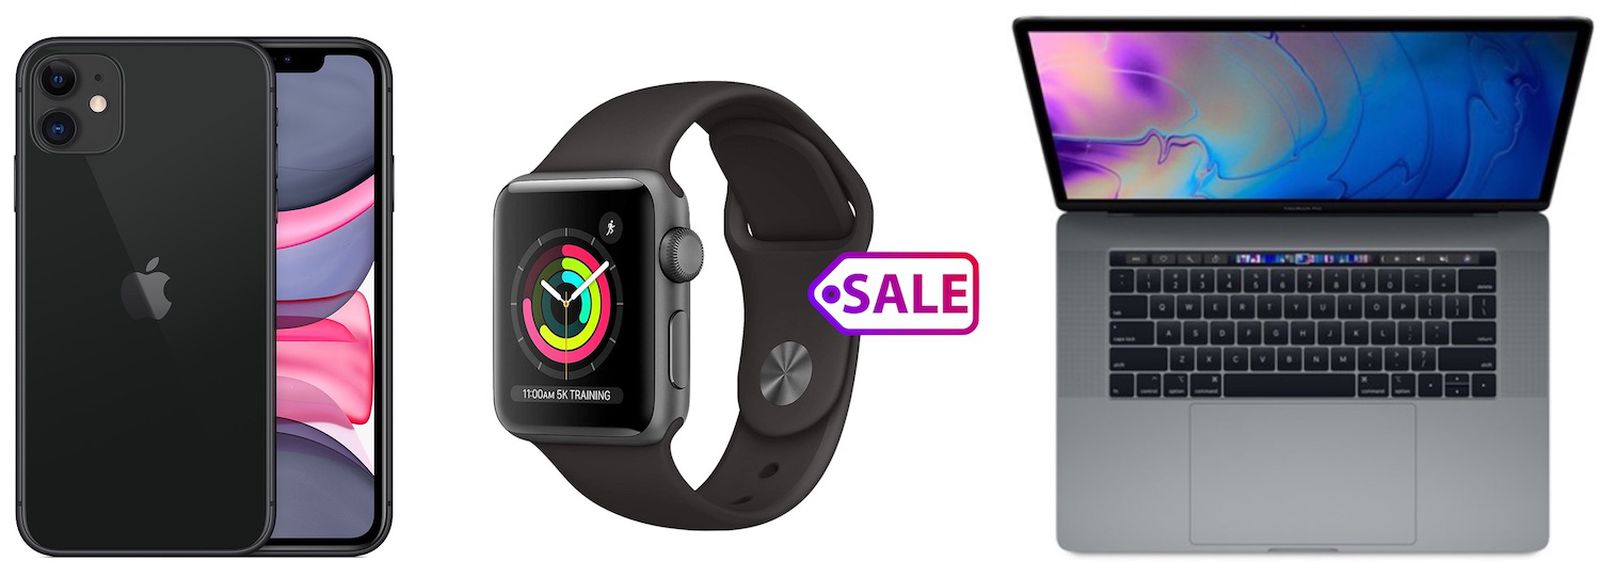 Deals: Woot Discounts Refurbished Apple Watch Series 3, iPhone 11, and MacBook Models - MacRumors